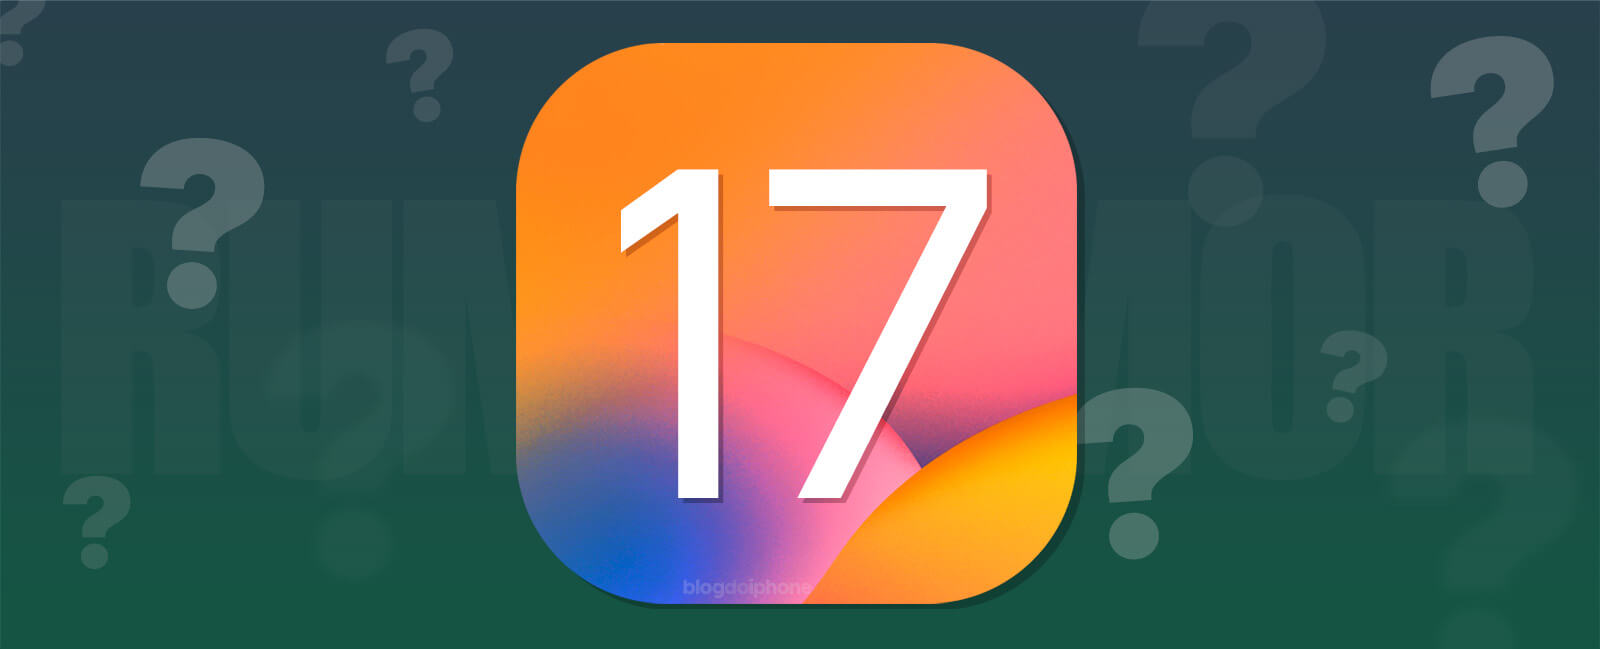 iOS 17 rumor